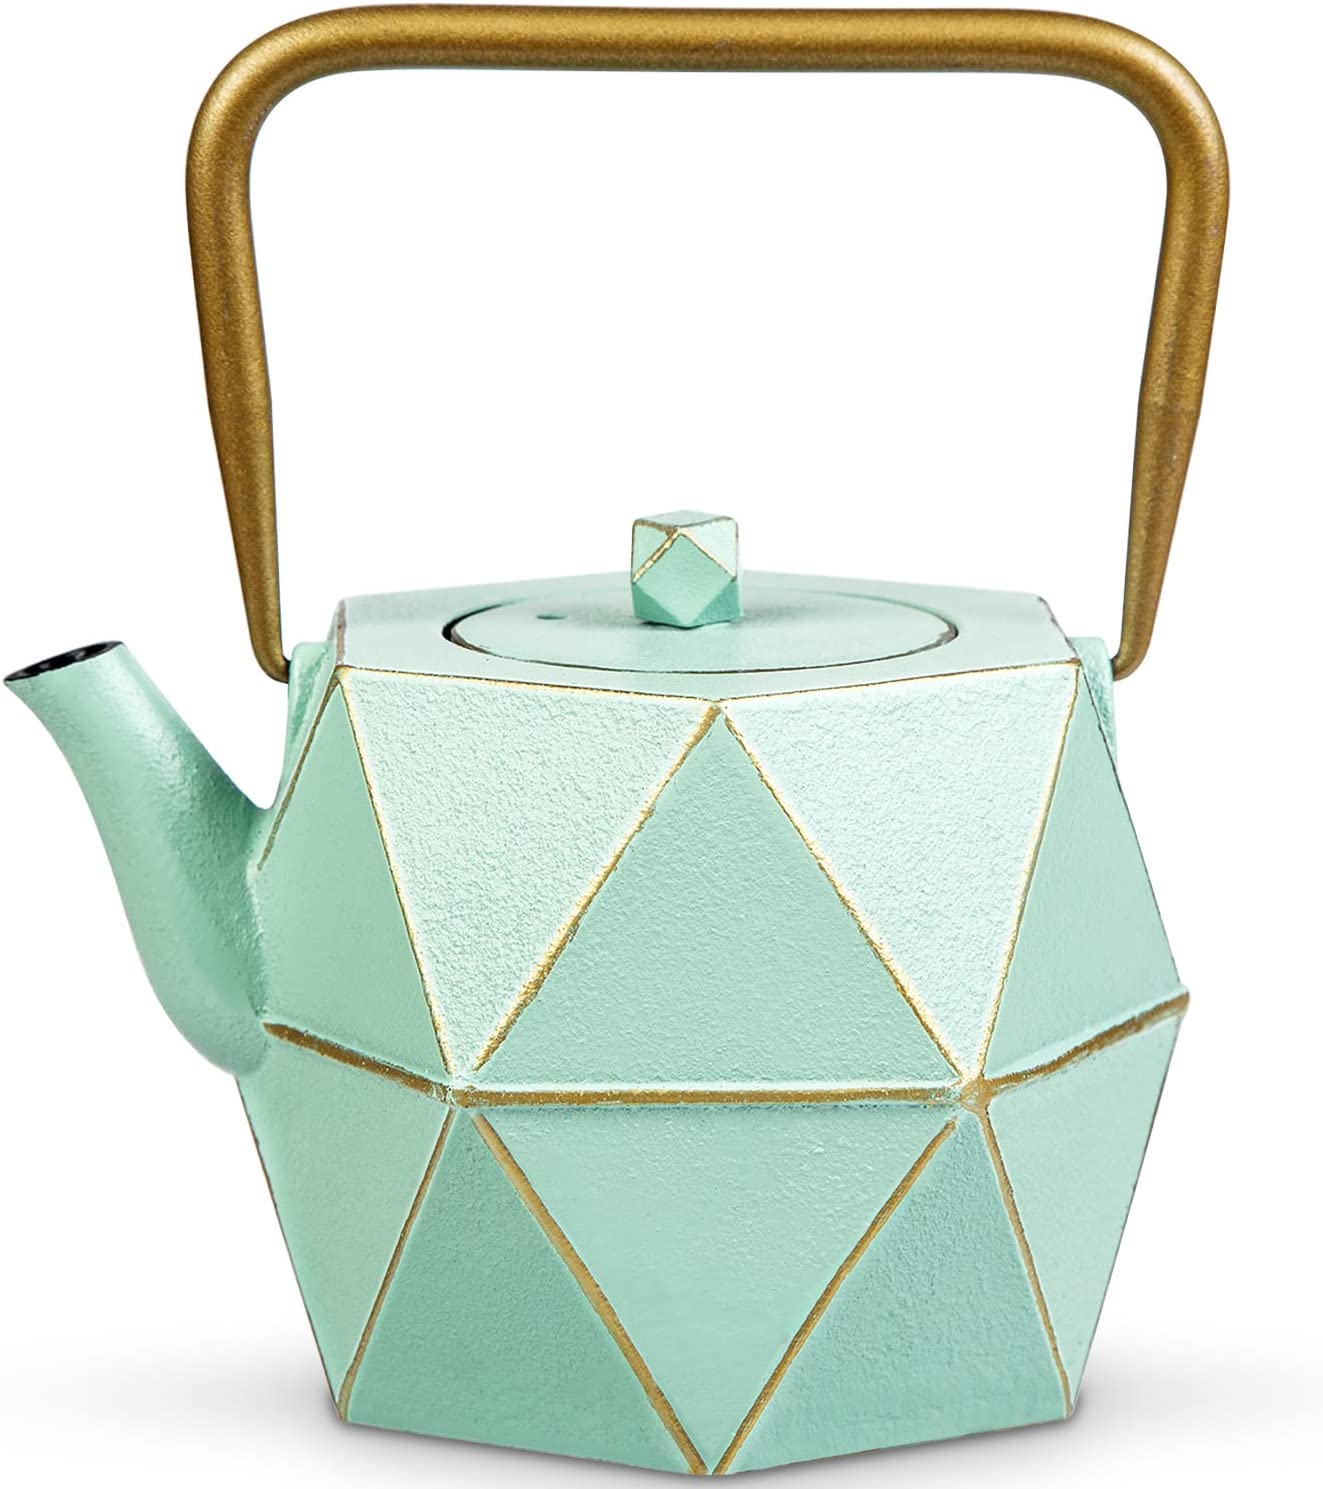 Teapot, Toptier Teapot Japanese Cast Iron Teapot with Stainless Steel Tea Infuser, Durable Cast Iron Kettle Safe, Diamond Shaped Design, Tea Friends Gift (30 oz/900 ml) Light Green